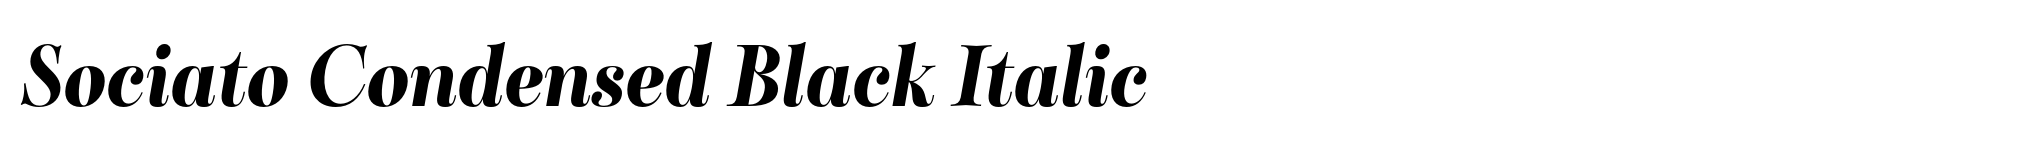 Sociato Condensed Black Italic image